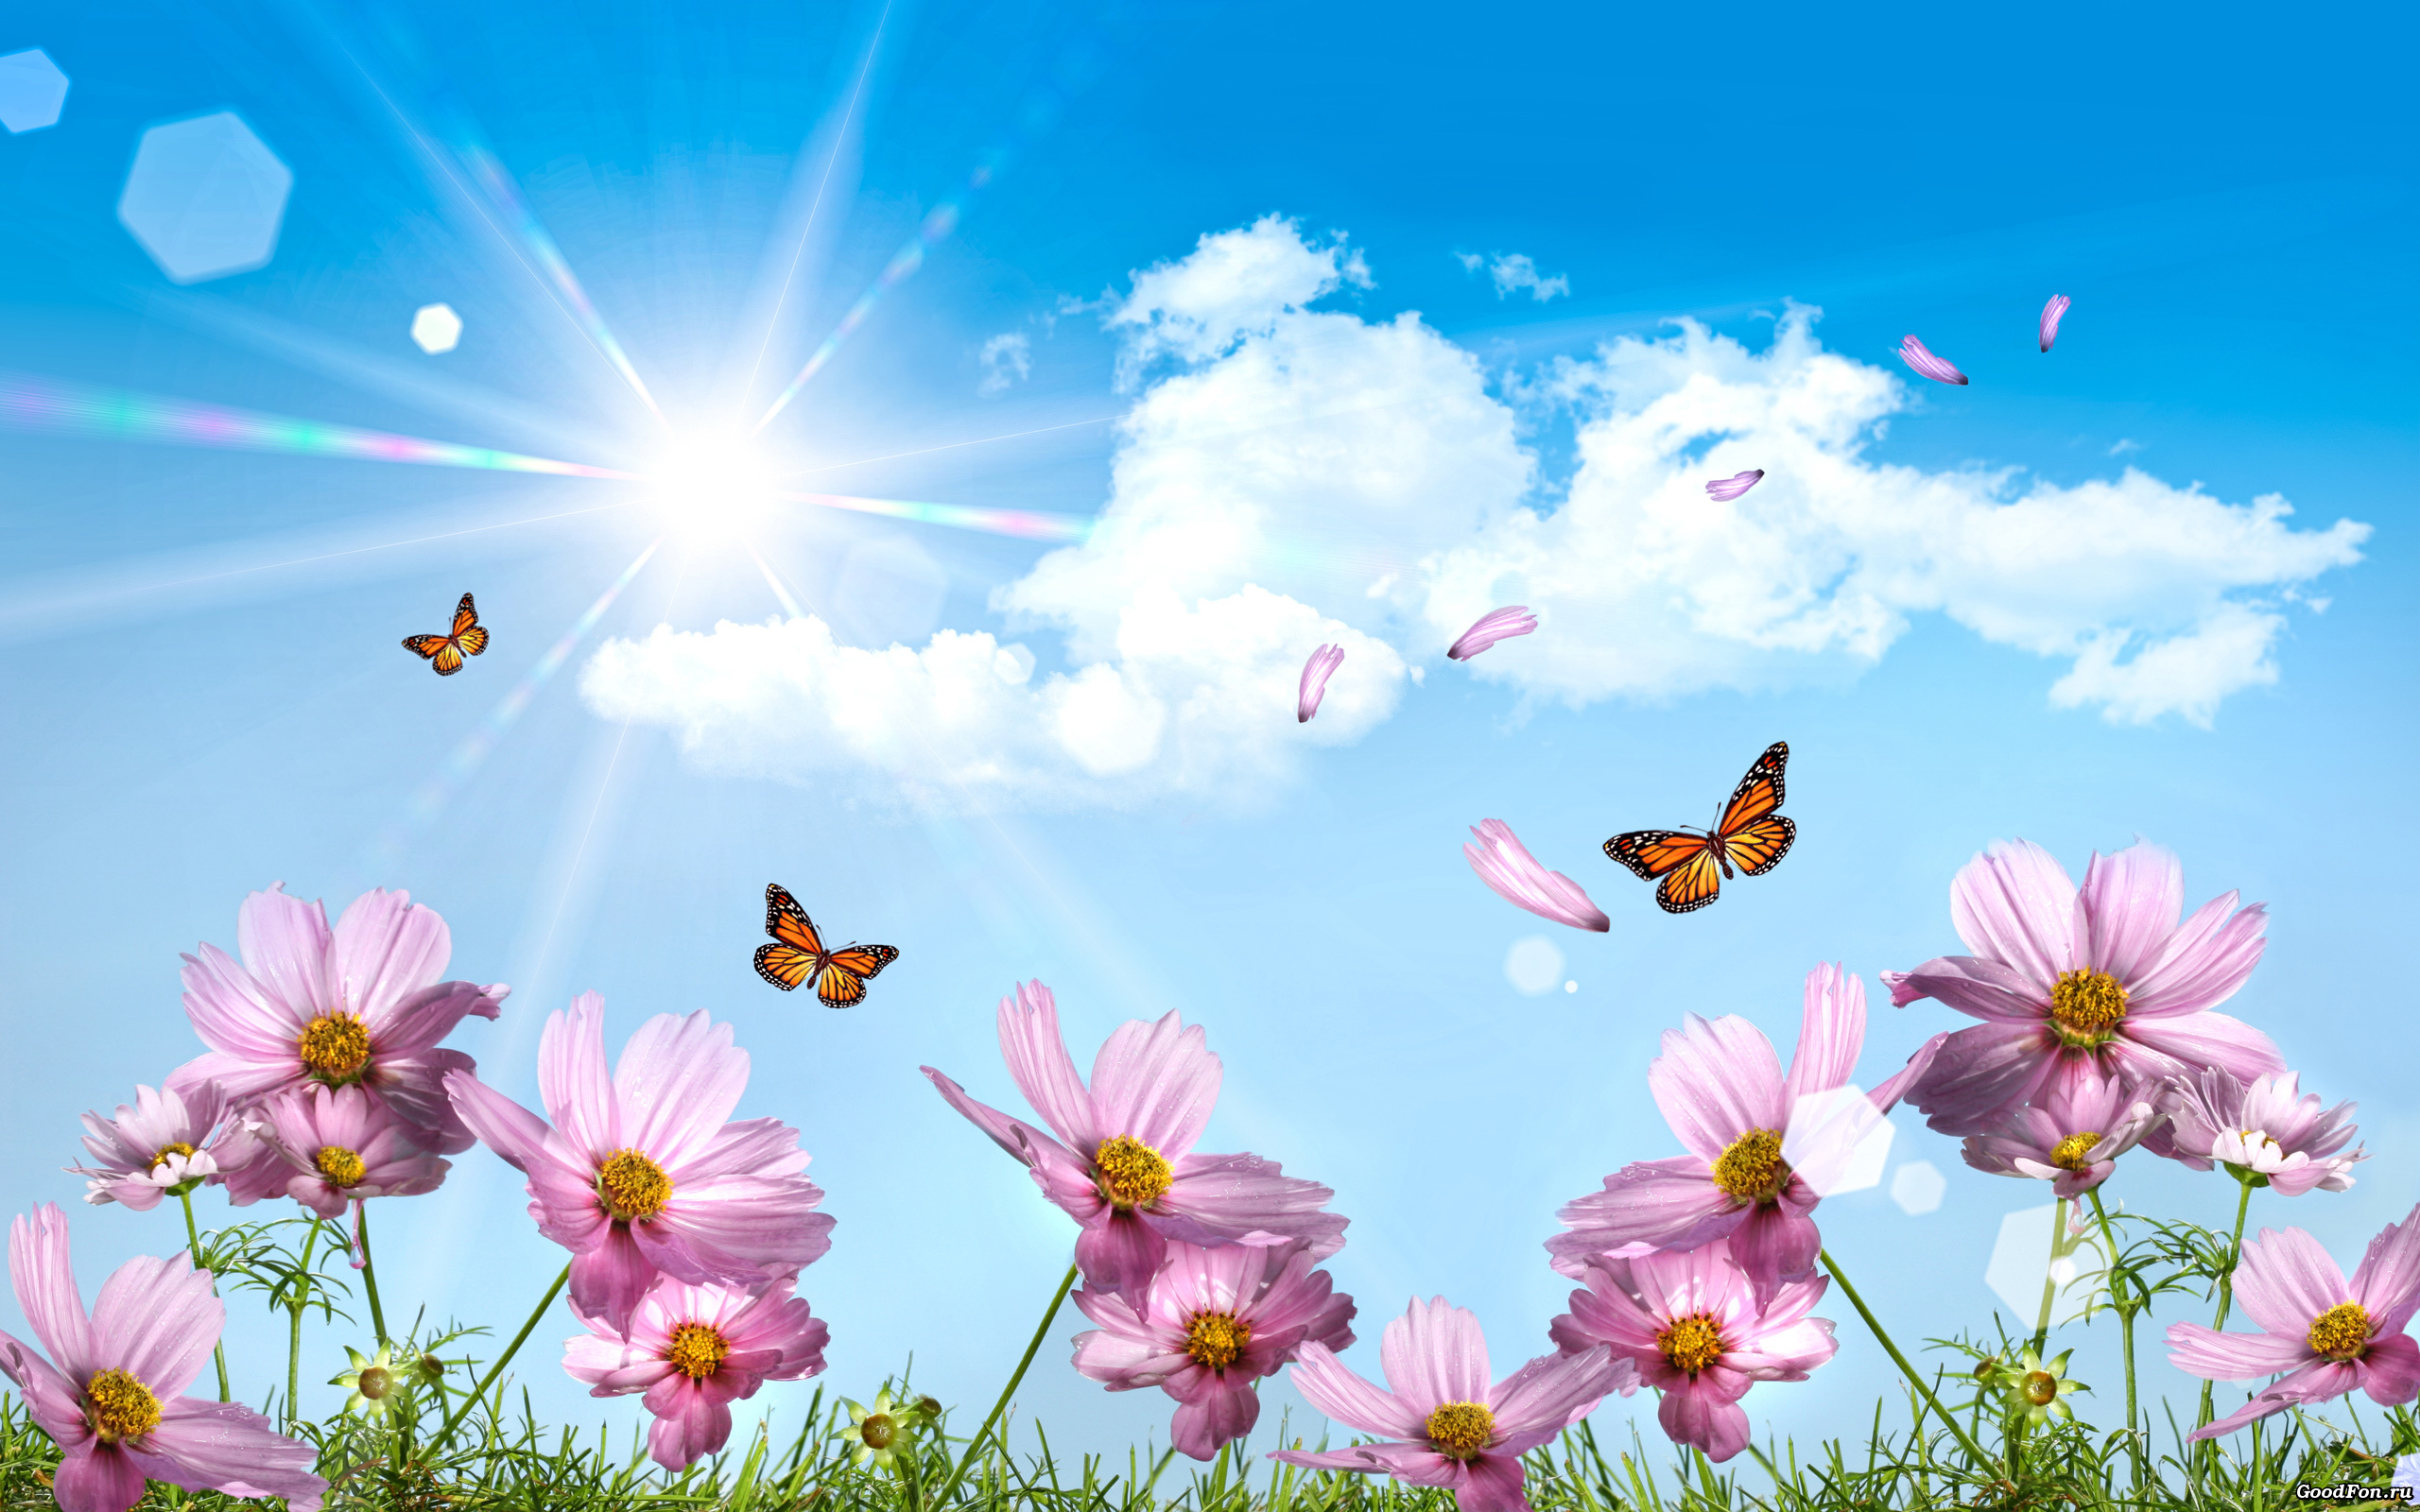 Descarga gratuita de fondo de pantalla para móvil de Cosmos, Mariposa, Primavera, Flores, Flor, Tierra/naturaleza.